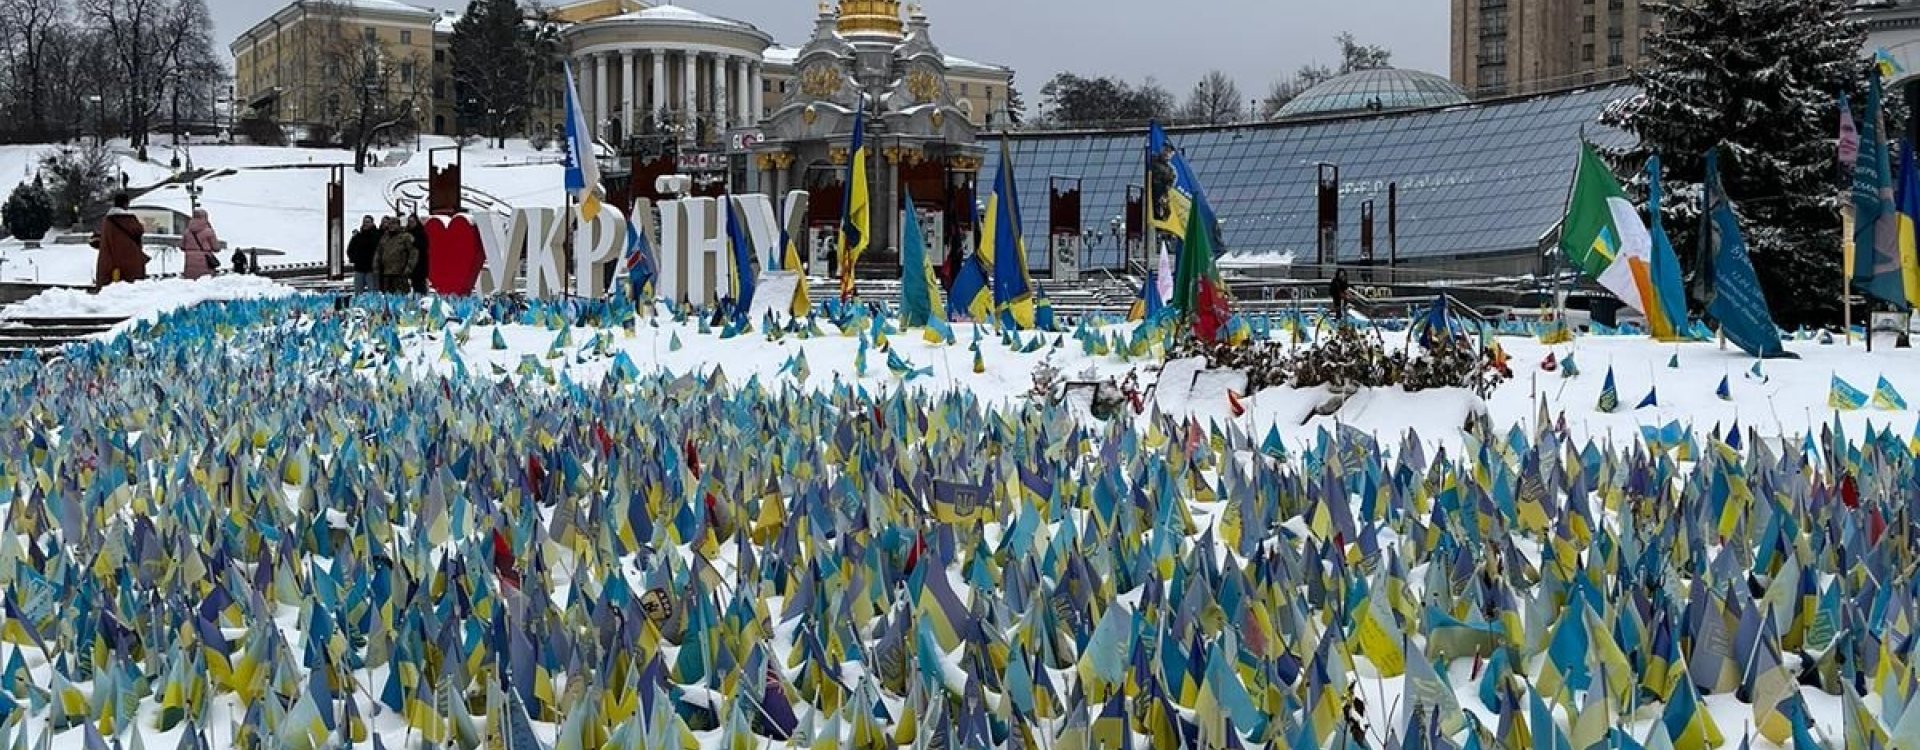 Maidan Square Flags to Remember Fallen Ukrainians